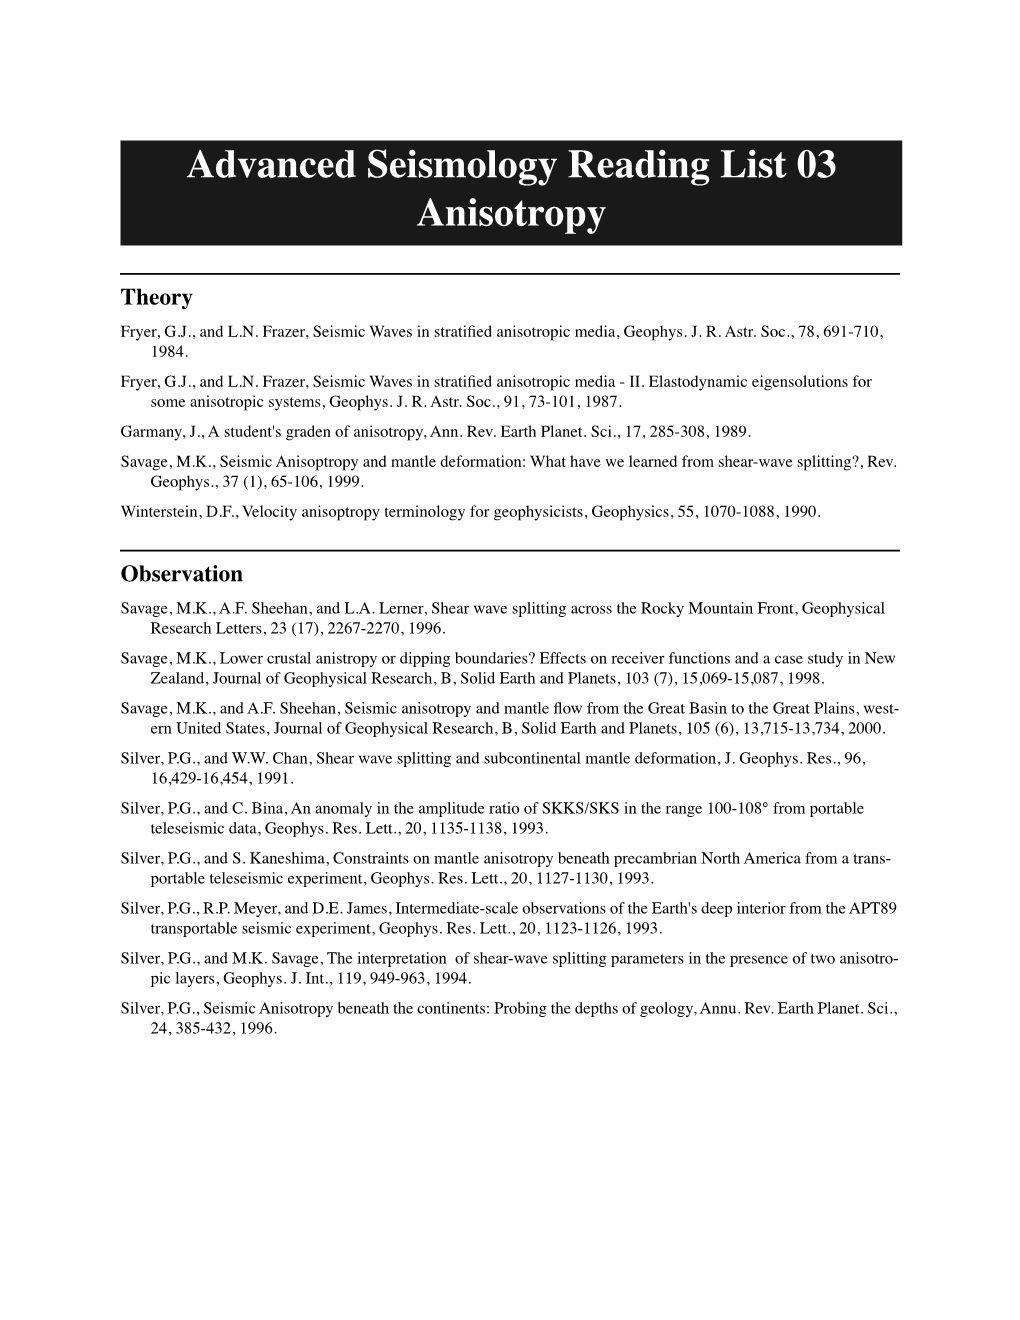 Advanced Seismology Reading List 03 Anisotropy